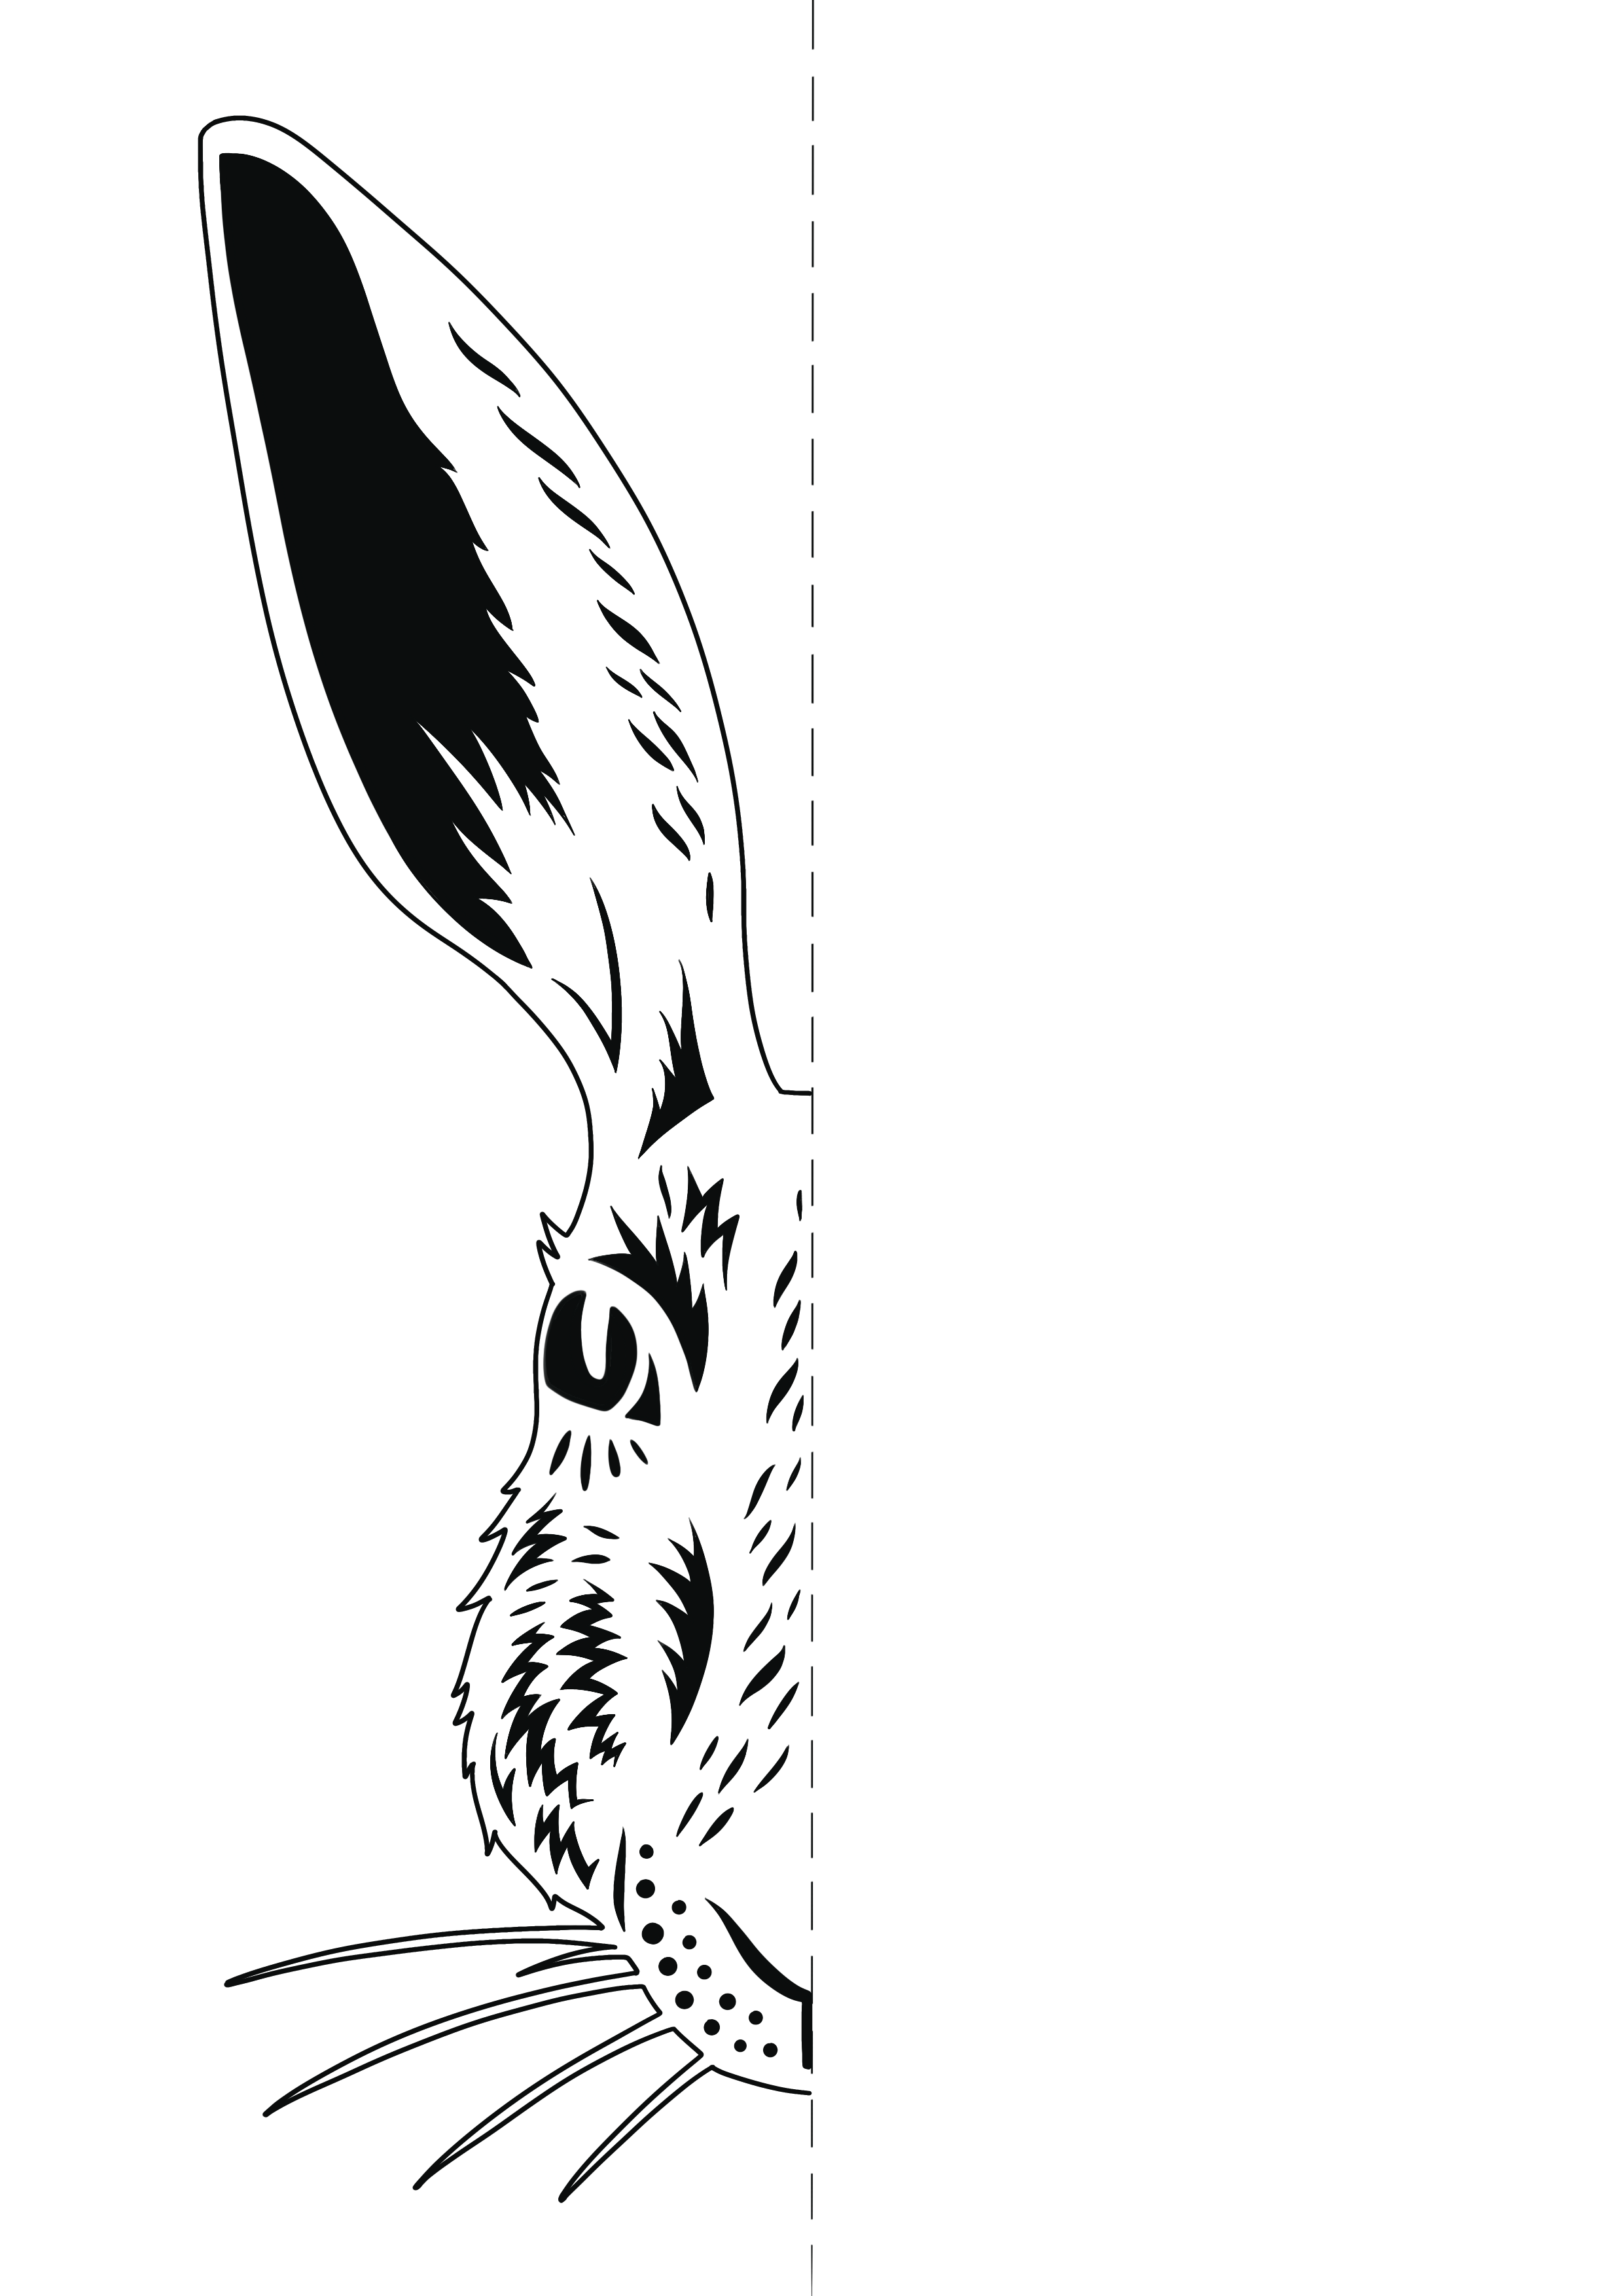 Hare cutout for portrait frame